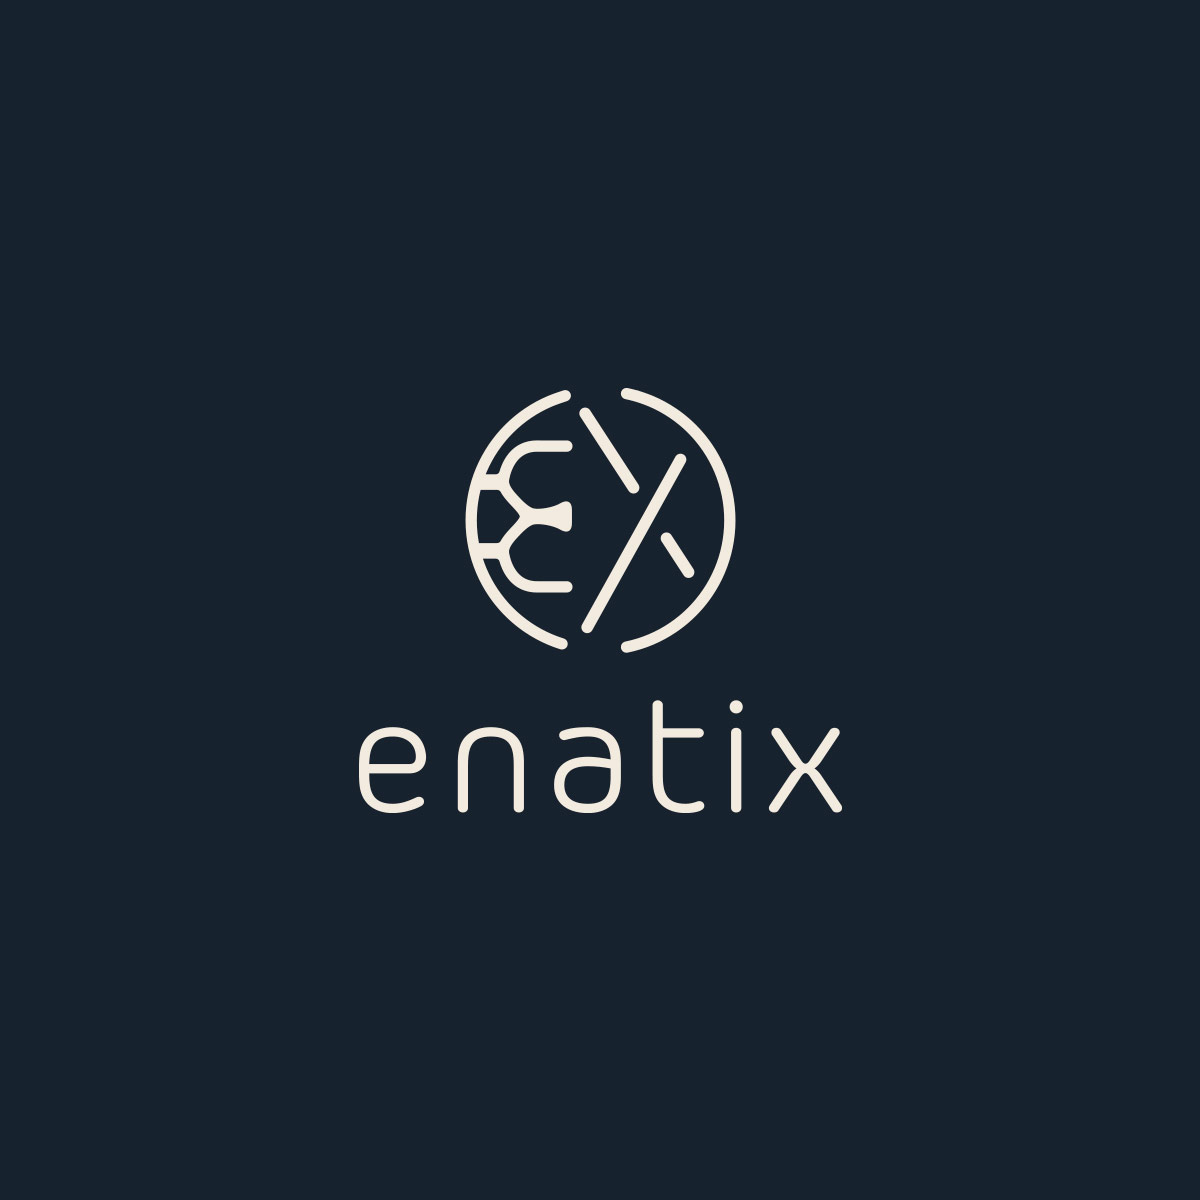 Charte graphique et Logo Enatix - Cover